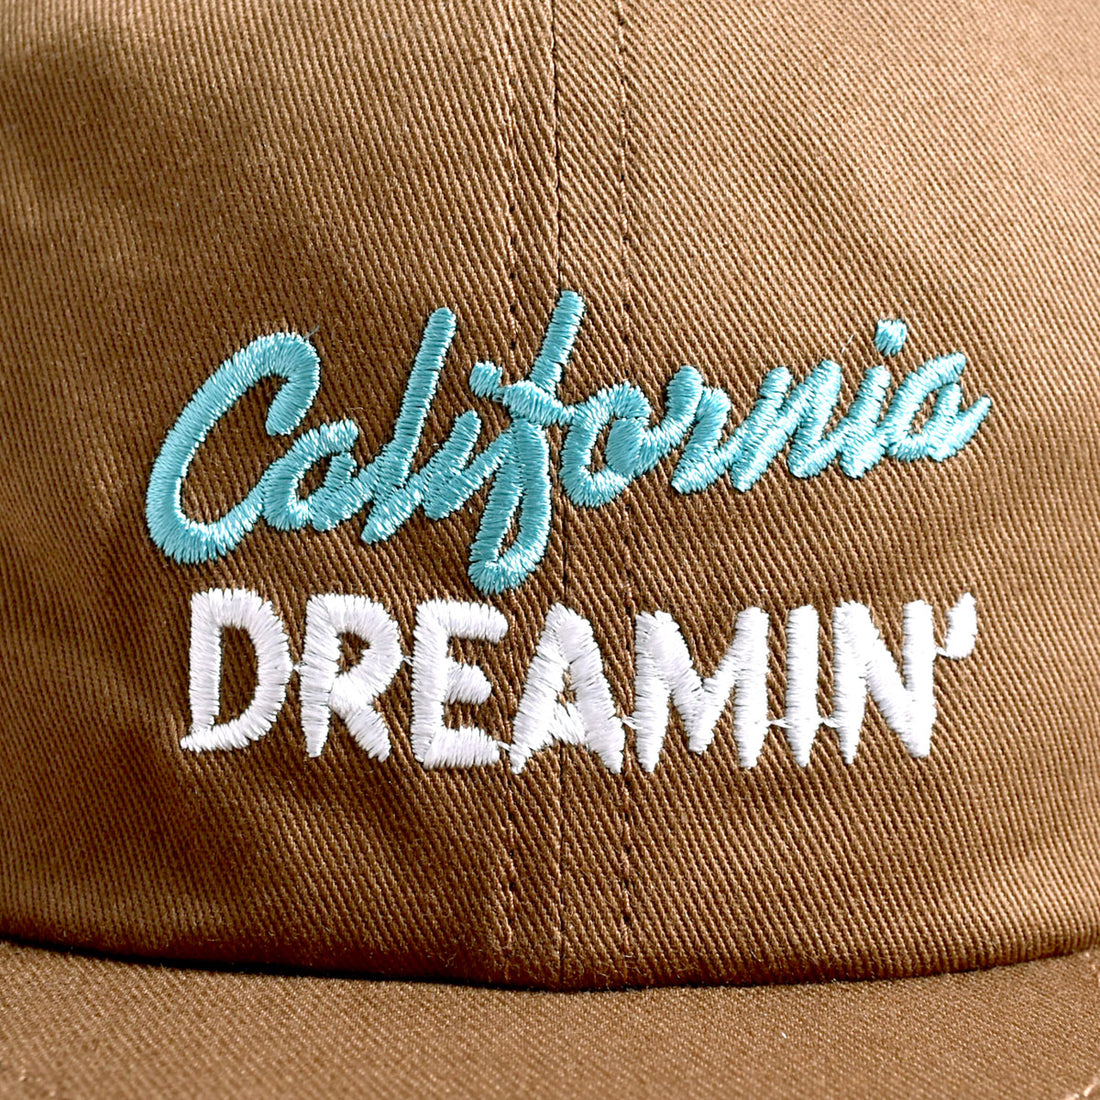 [STANDARD CALIFORNIA]SD California Dreamin’ Twill Cap/BROWN(OTCOX070)